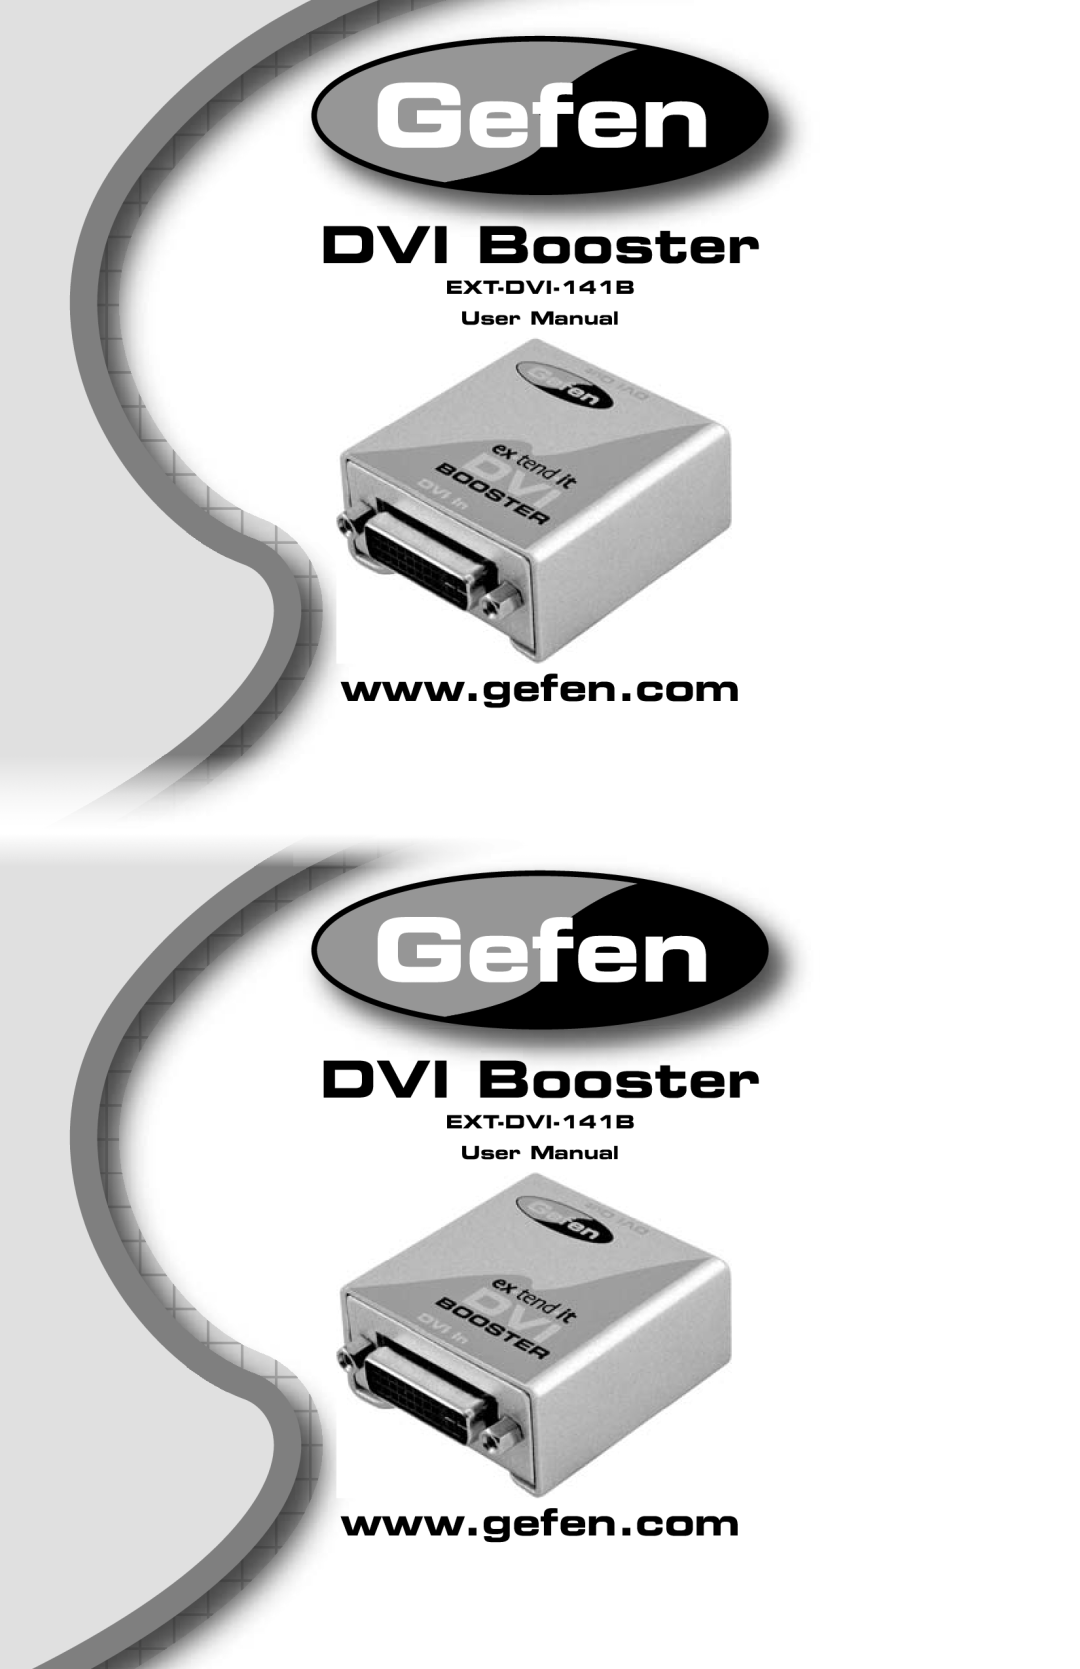 Gefen user manual EXT-DVI-141B User Manual, DVI Booster 